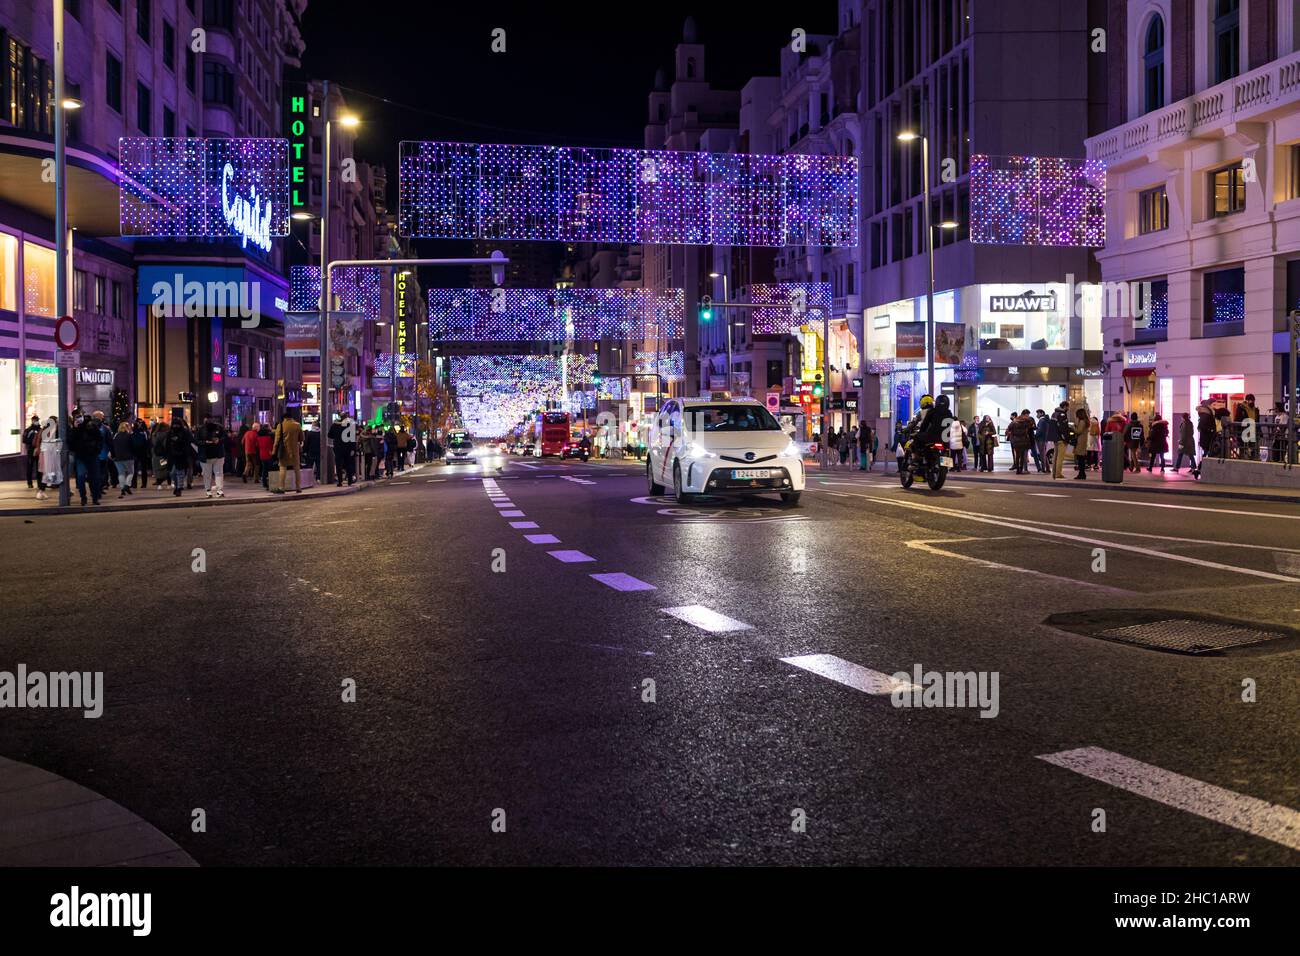 Madrid, Spain - December 13, 2021: Christmas lights shine on Gran Via street n Madrid, Spain. Stock Photo